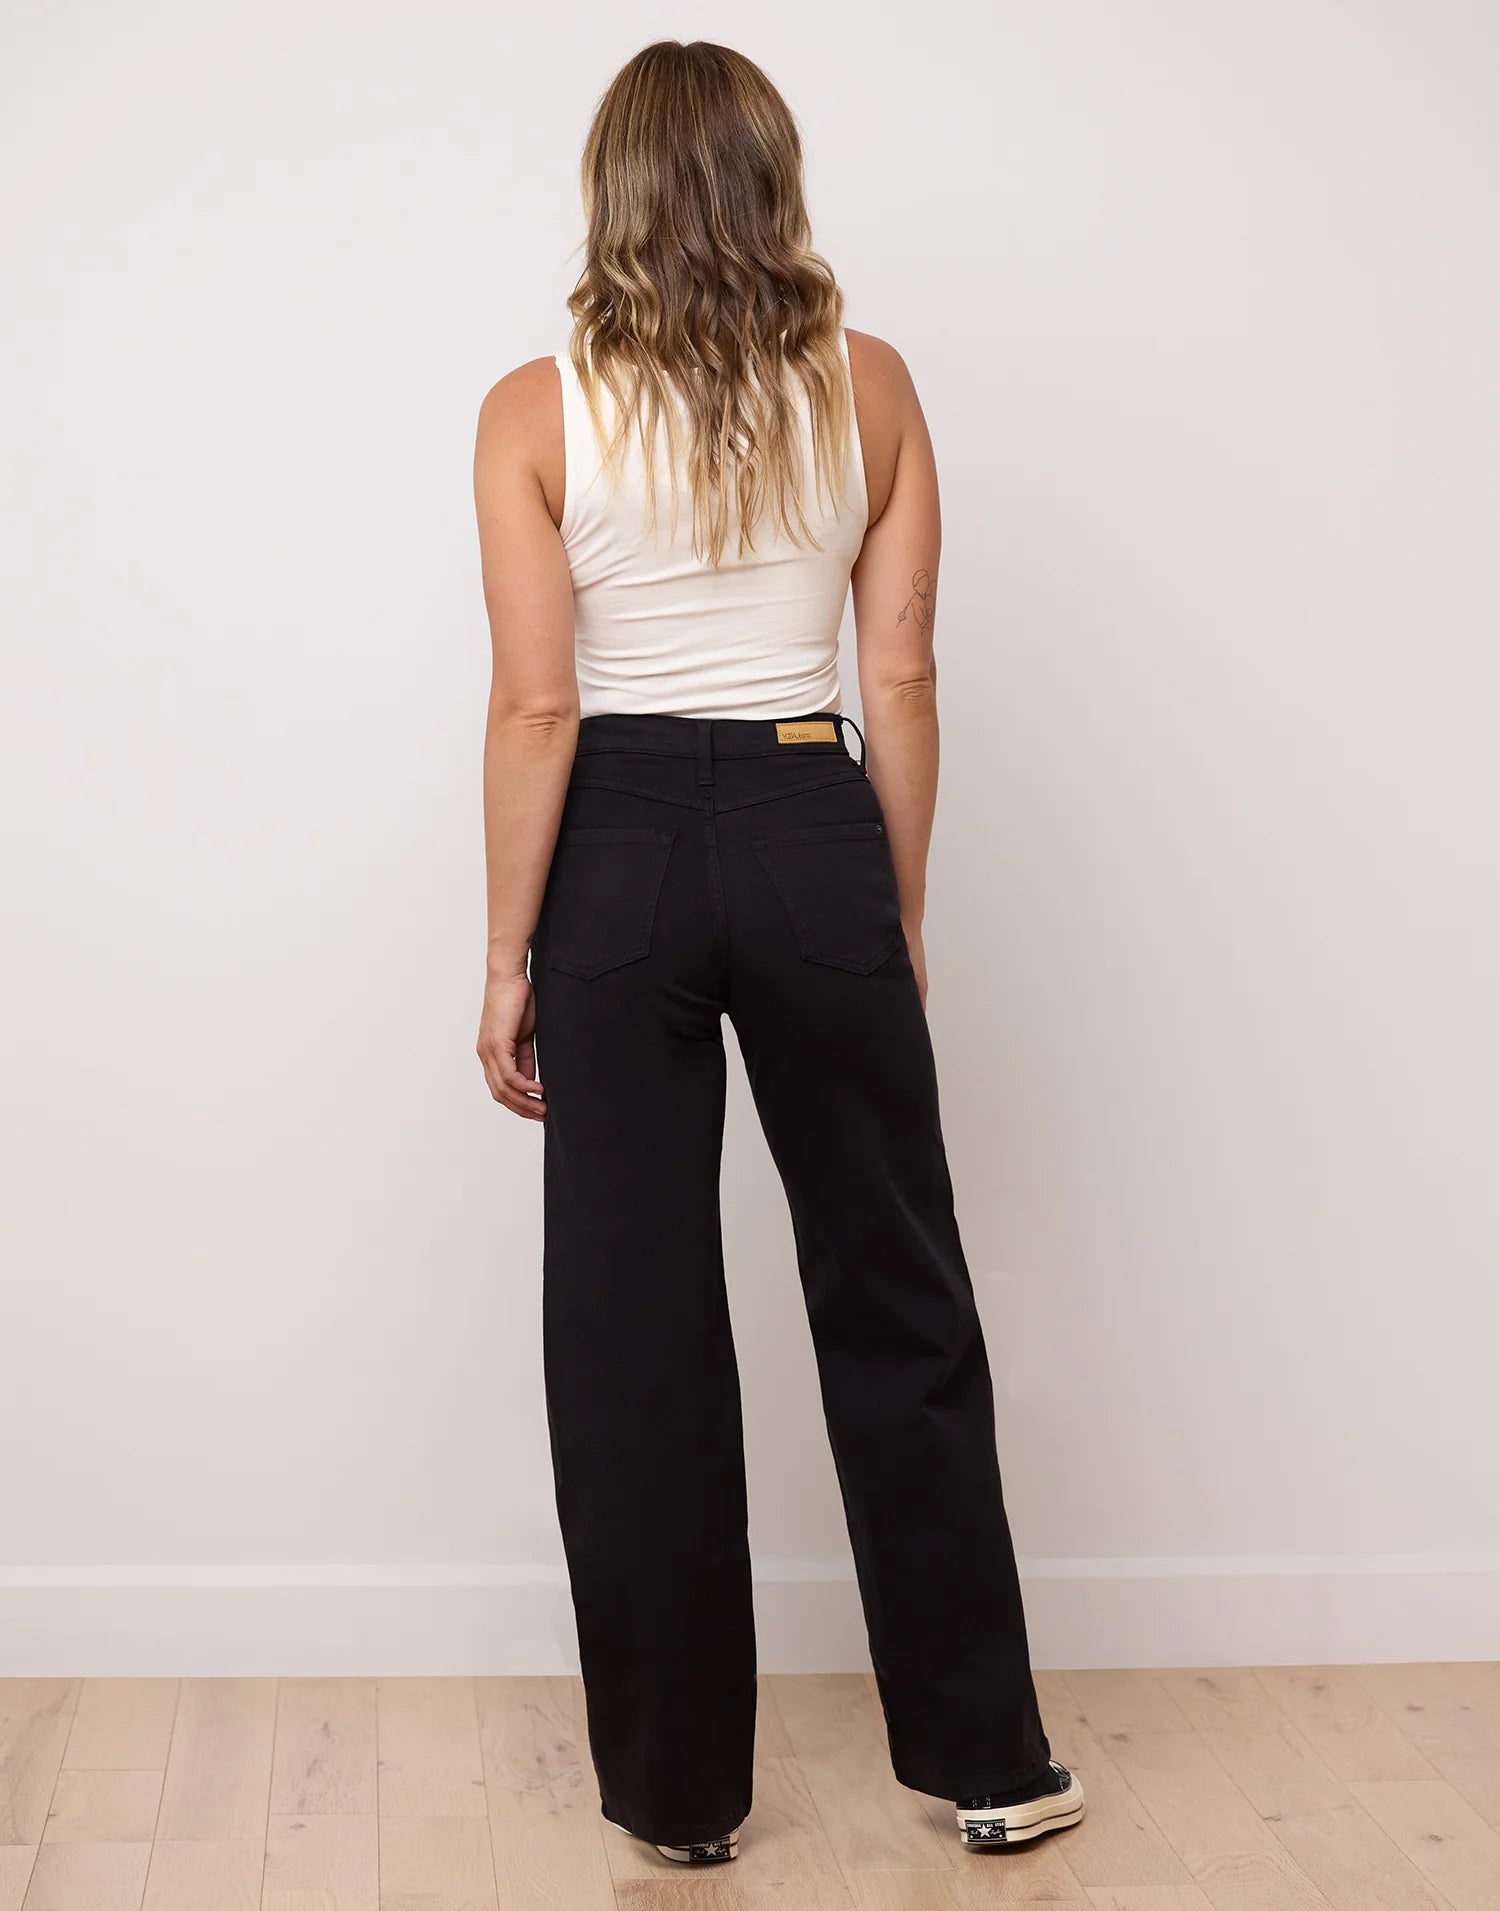 YUNAFFT Yoga Pants for Women Clearance Plus Size Women's Athletic And  Gentle Large Digital Printed Denim Sports Leggings Yoga Pants 